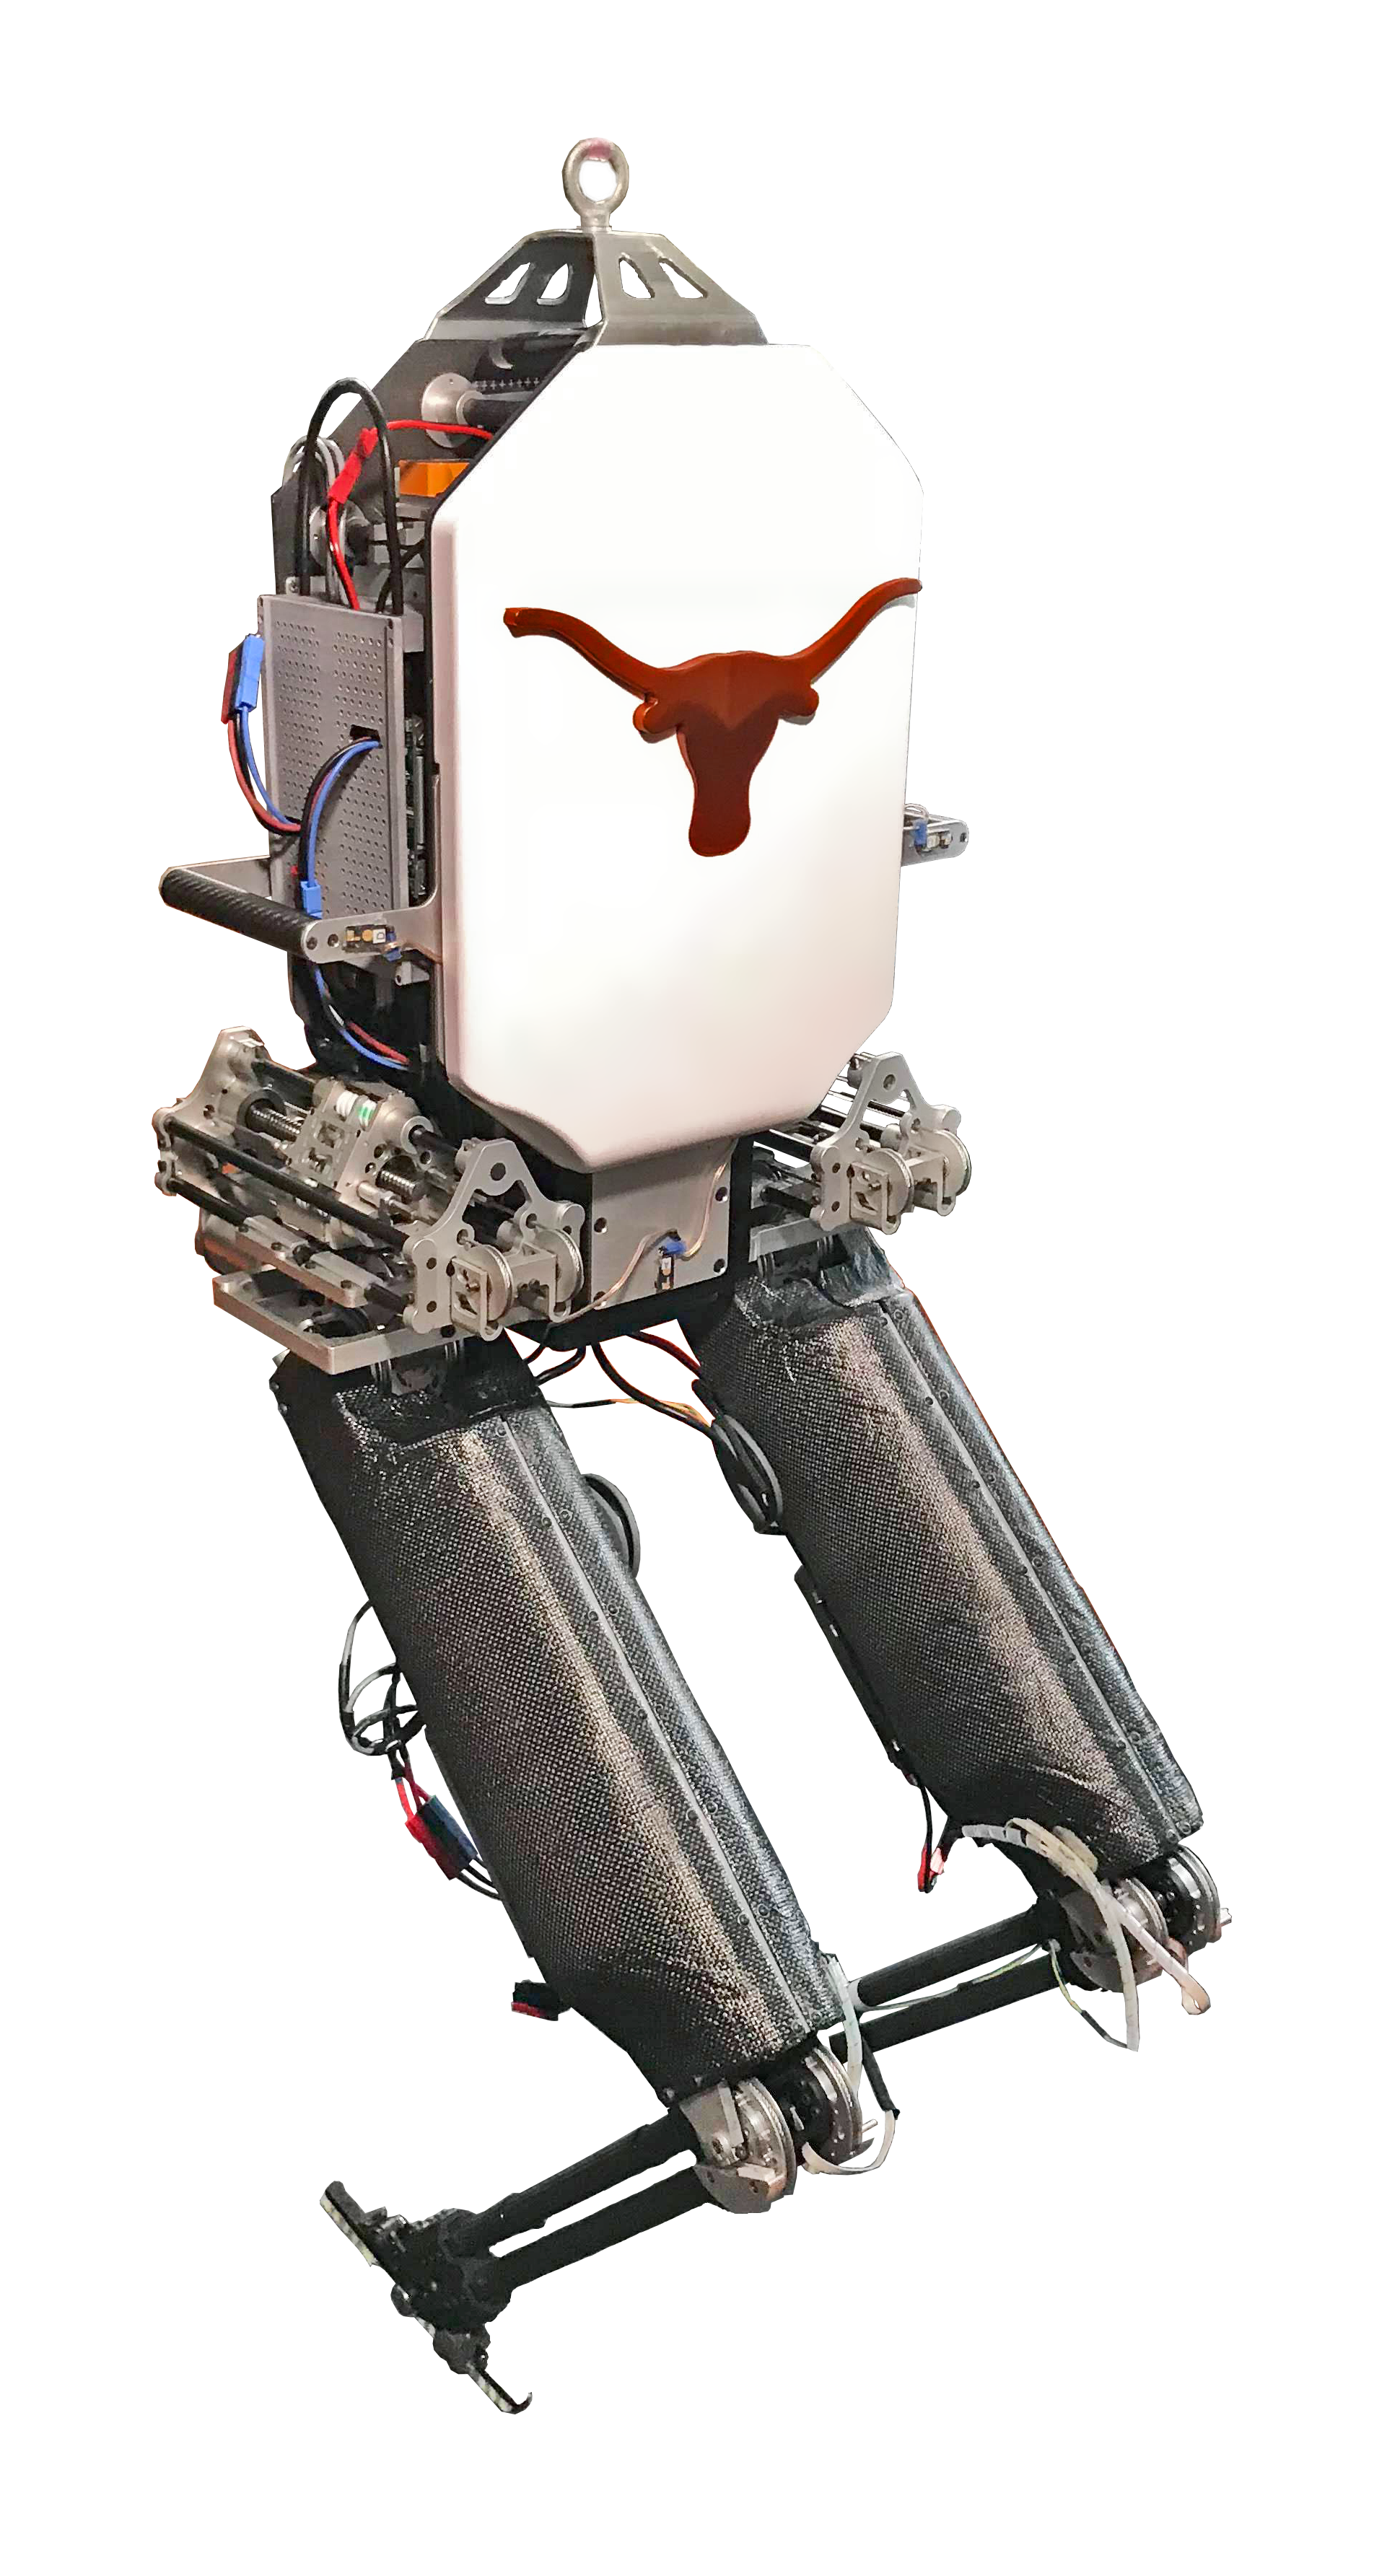 Bipedal robot from Luis Sentis' lab